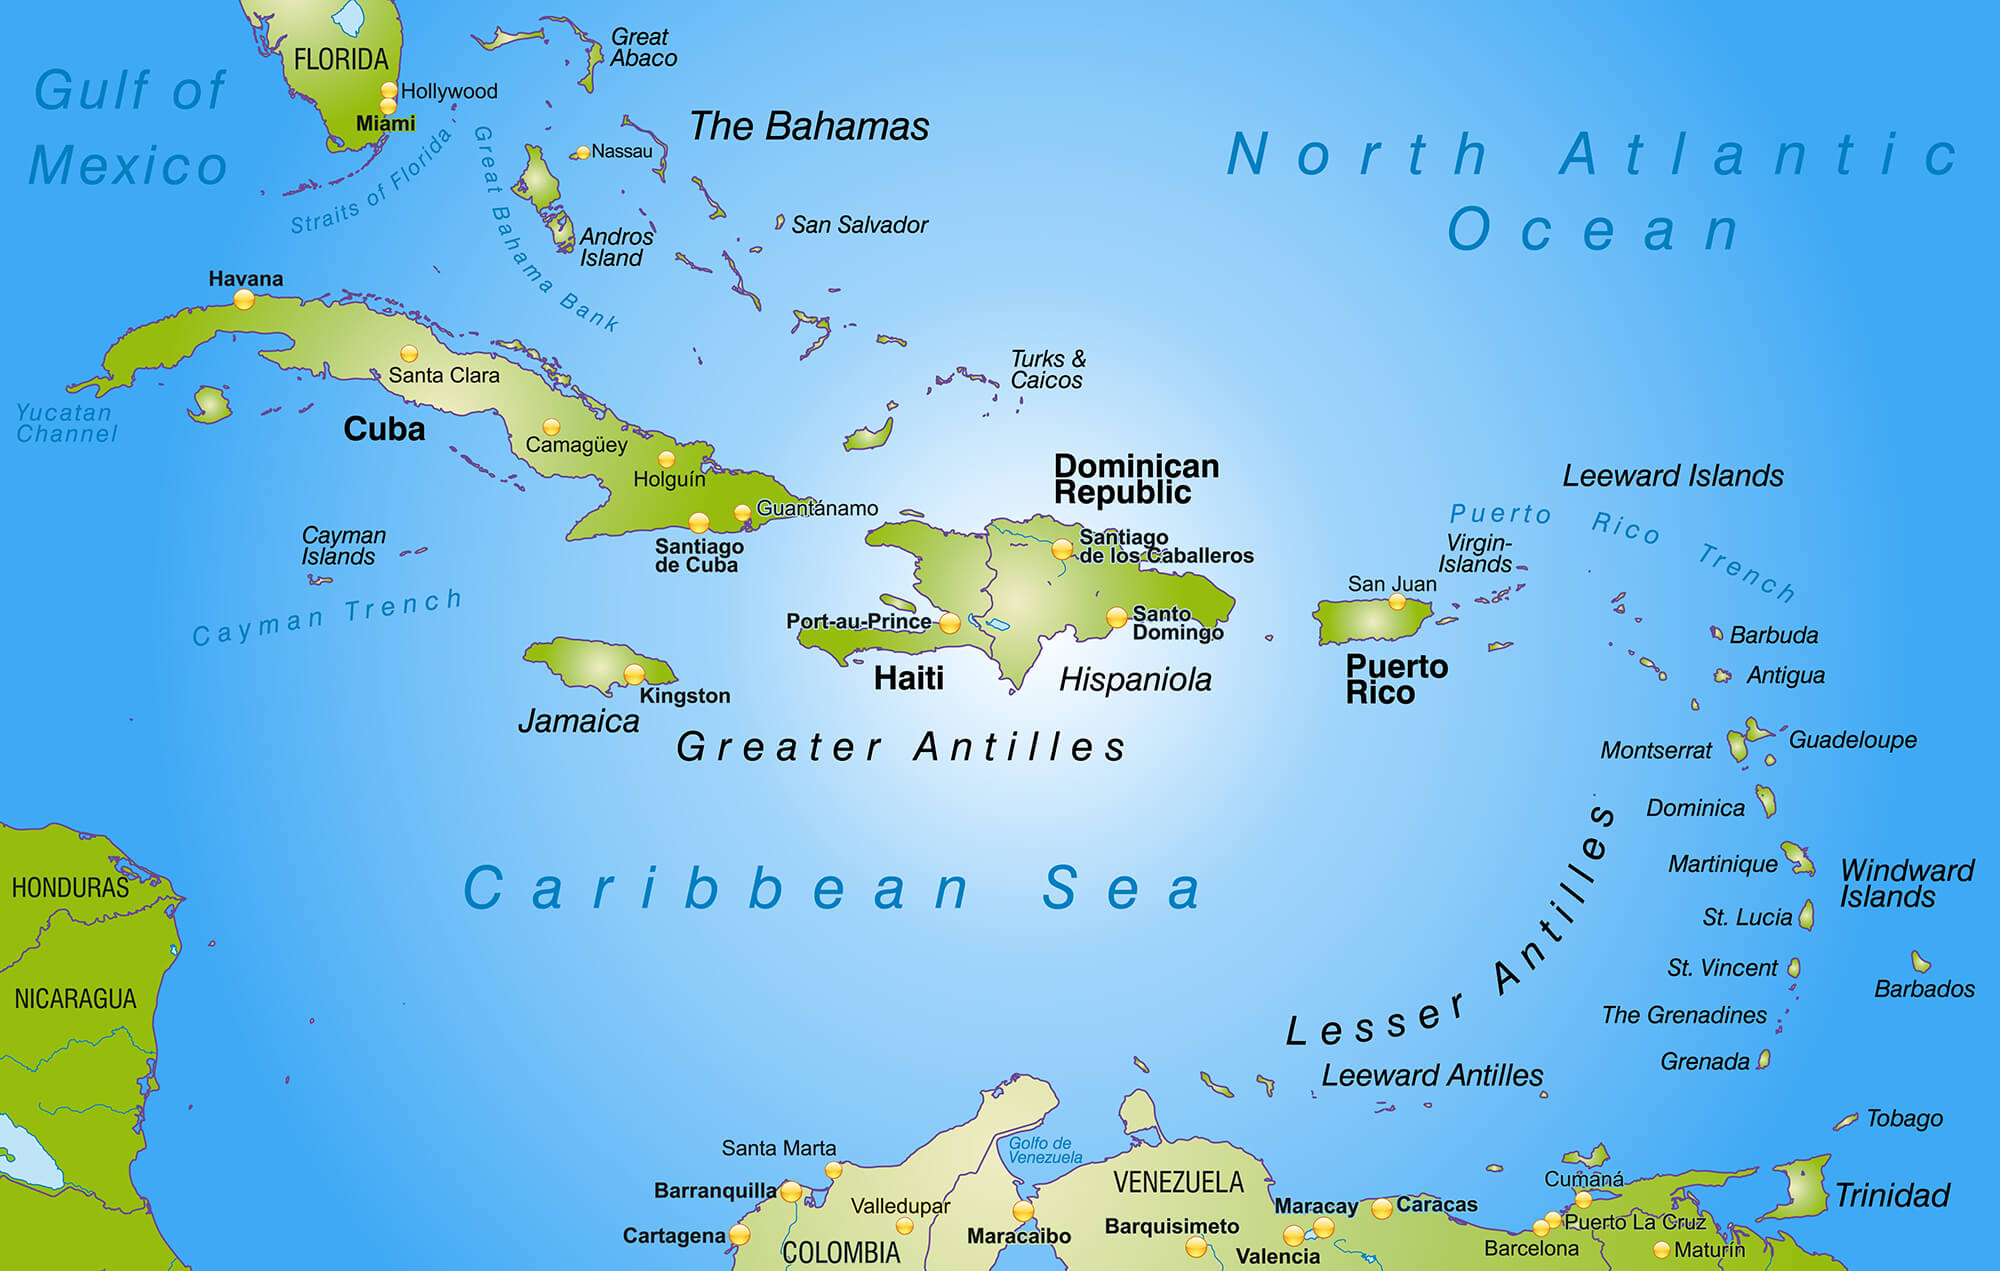 Caribbean Yacht Charter | Complete 2018/2019 Guide | CharterWorld